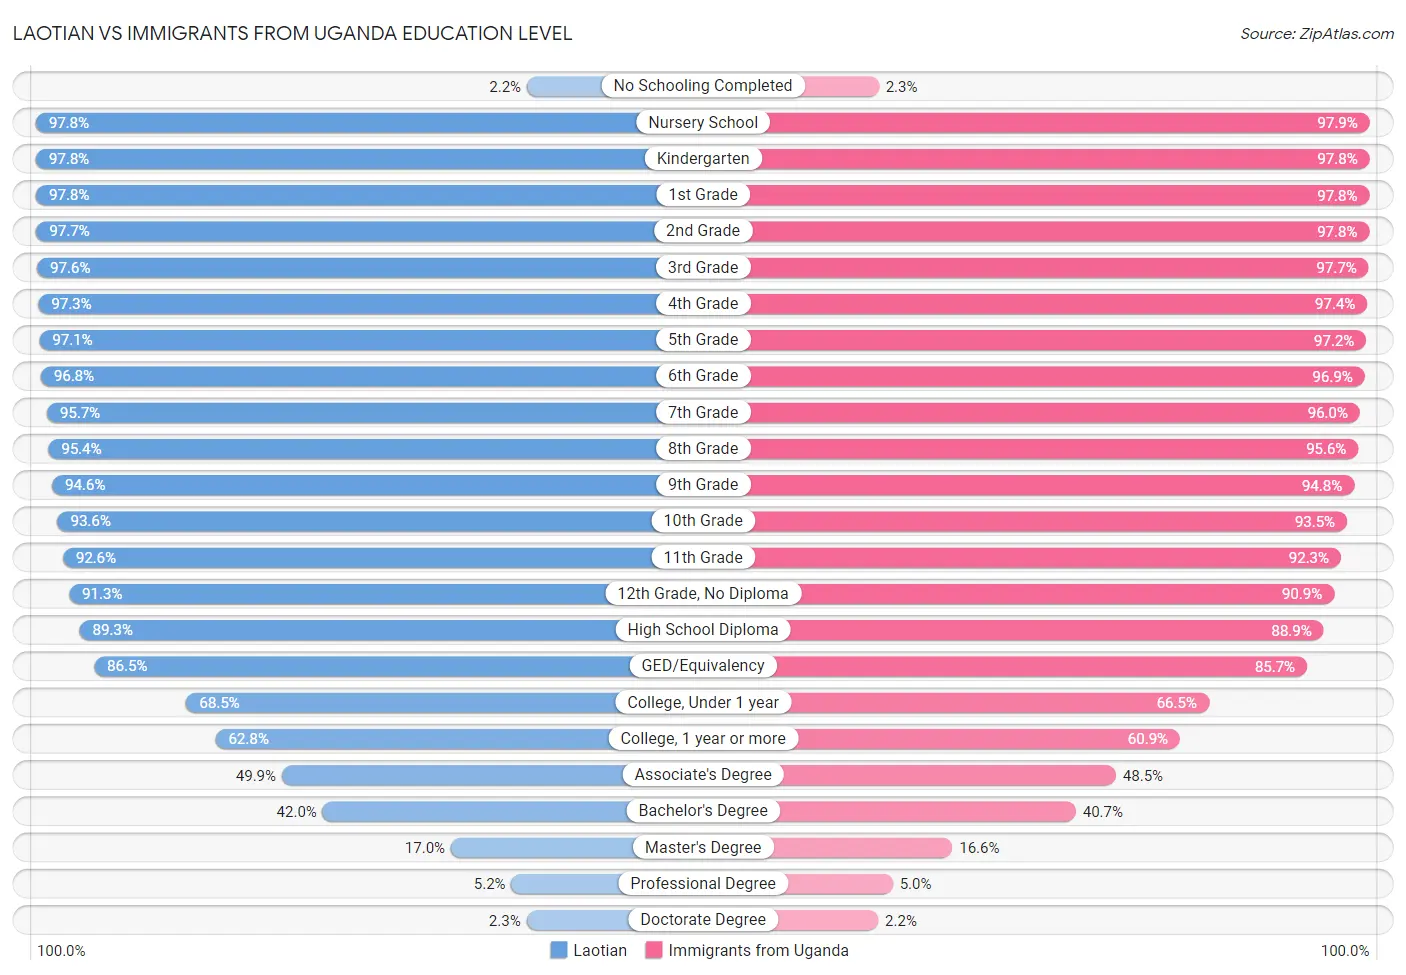 Laotian vs Immigrants from Uganda Education Level